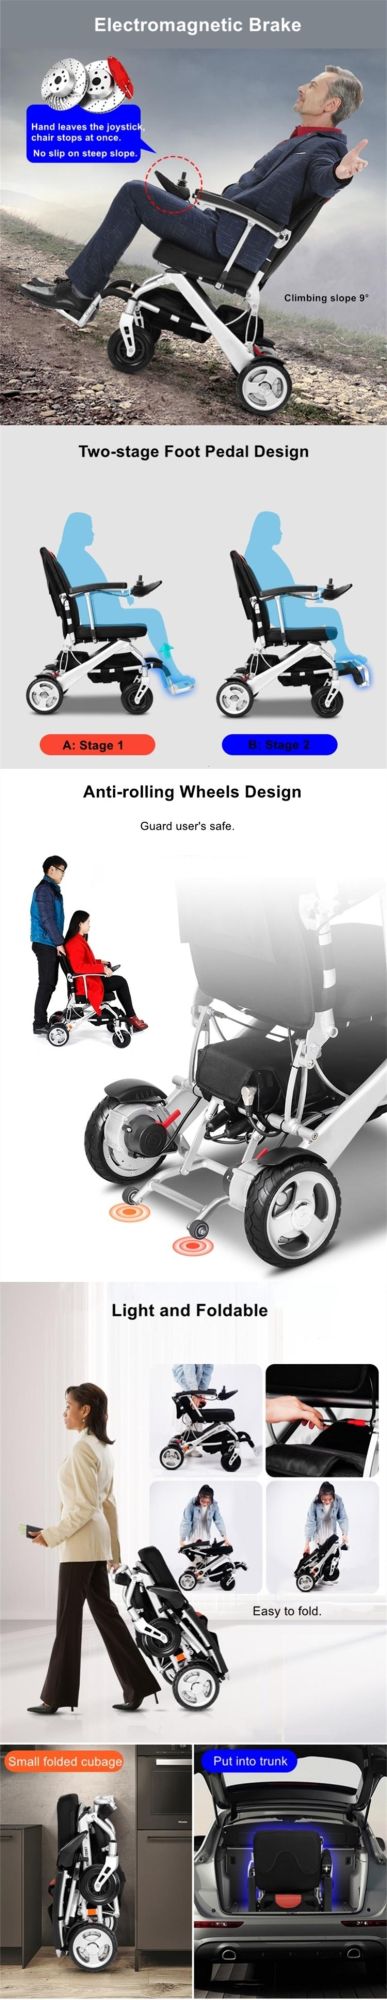 Recline Back Fauteuil Roulant Electrique Light Electric Folding Power Wheelchair